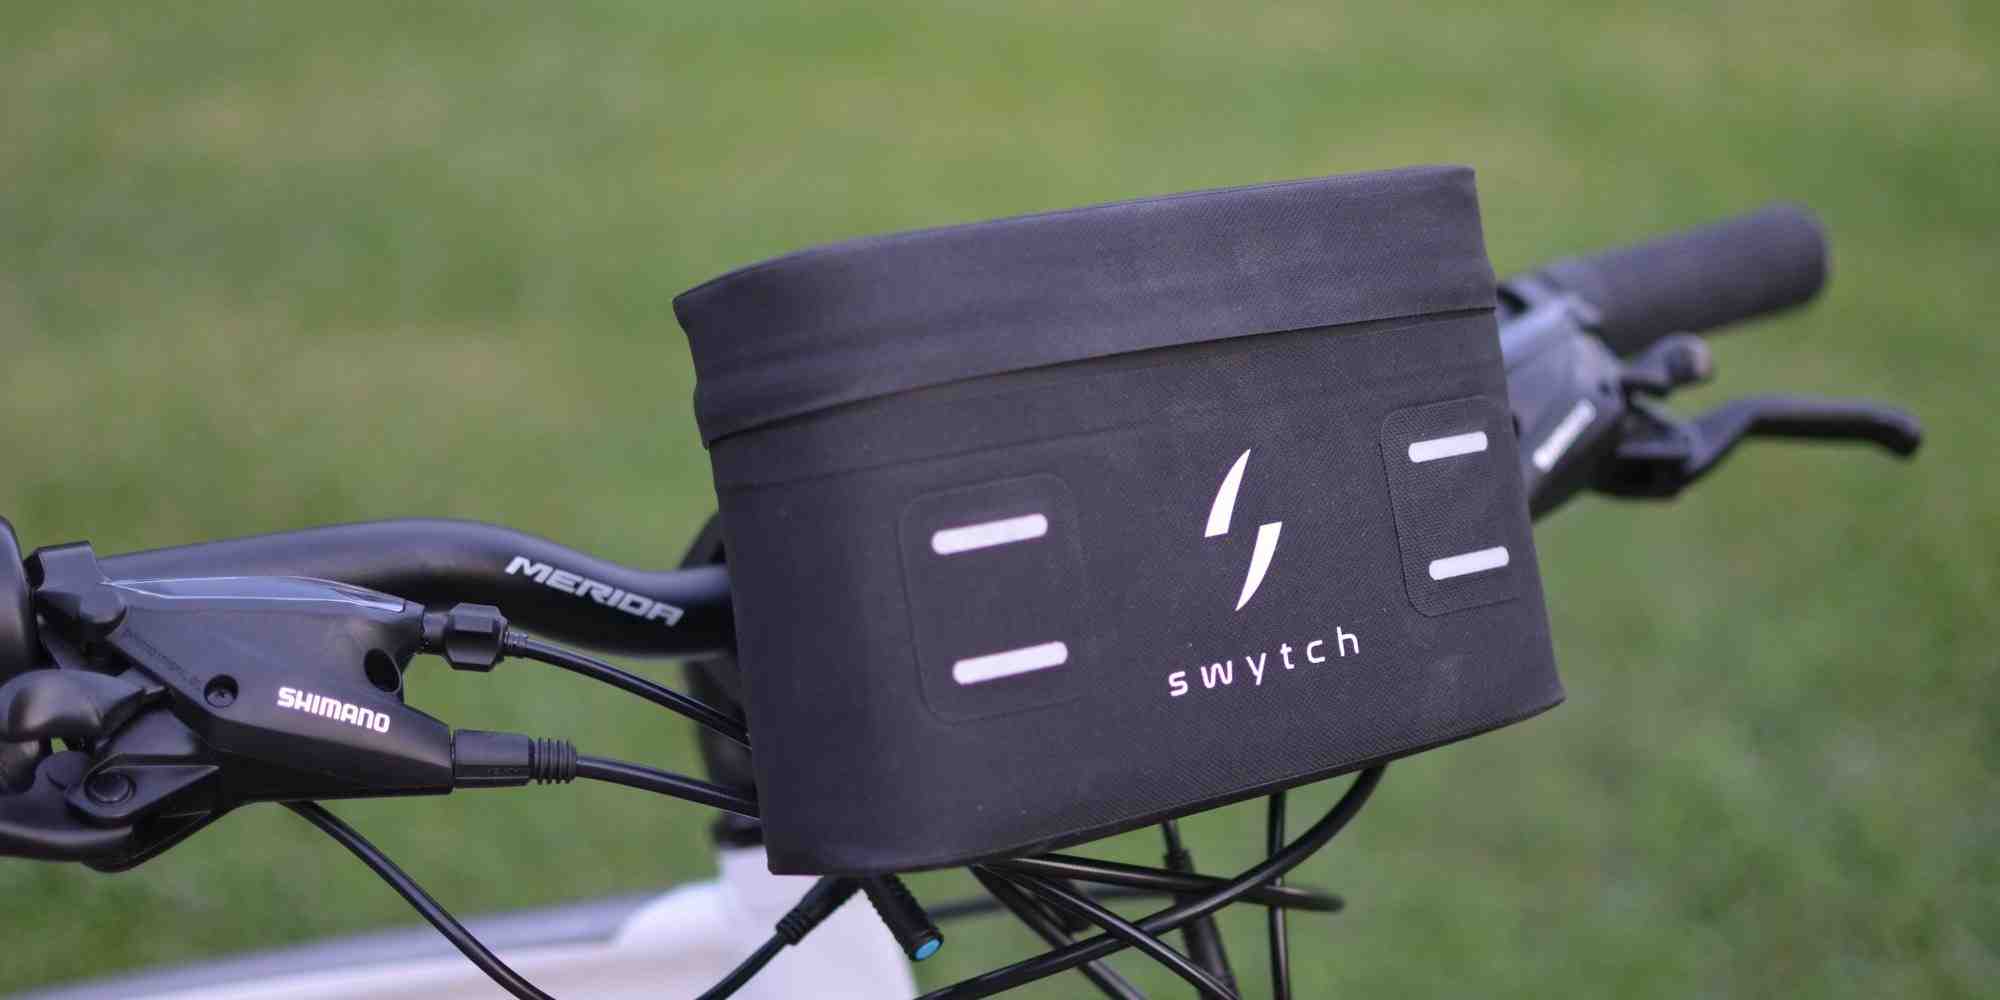 How do you electrify a bike?